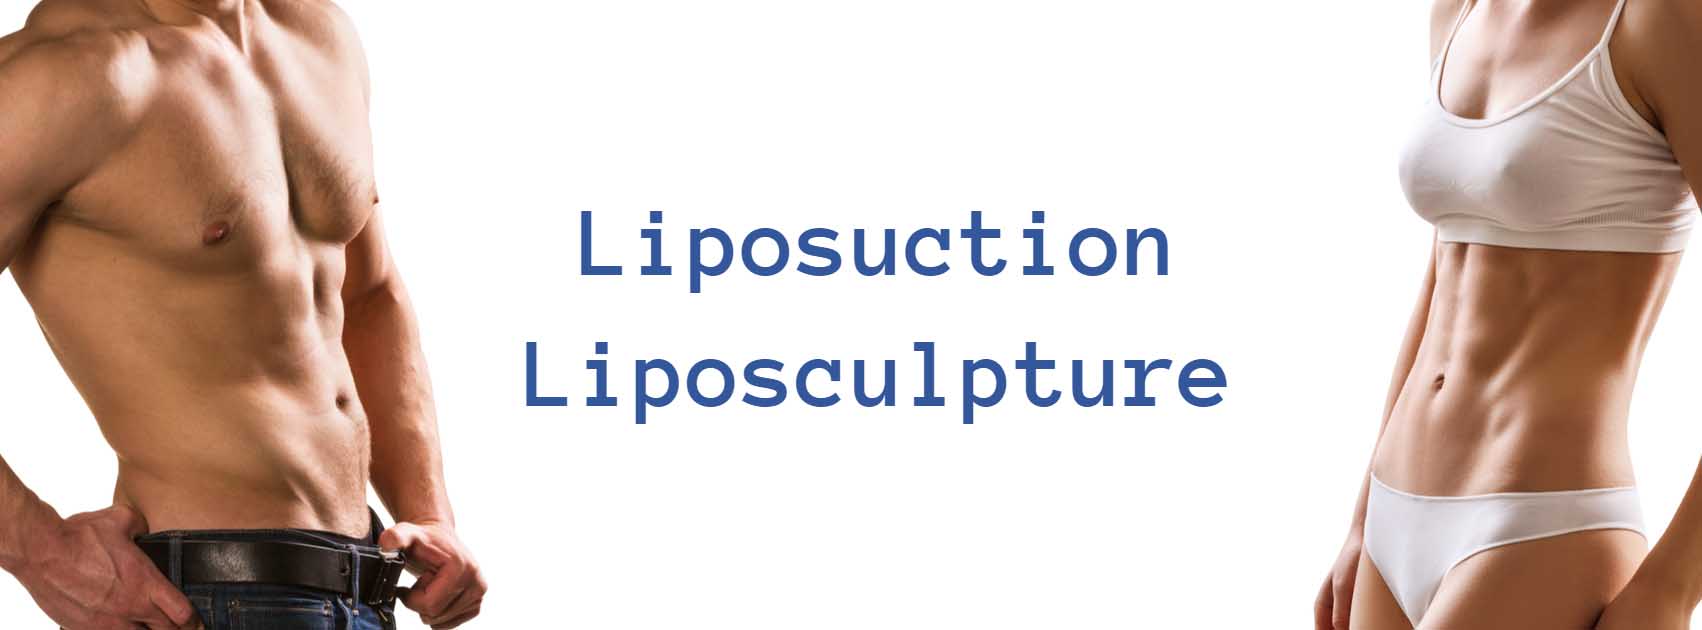 Stomach Liposuction - Abdominal Liposuction